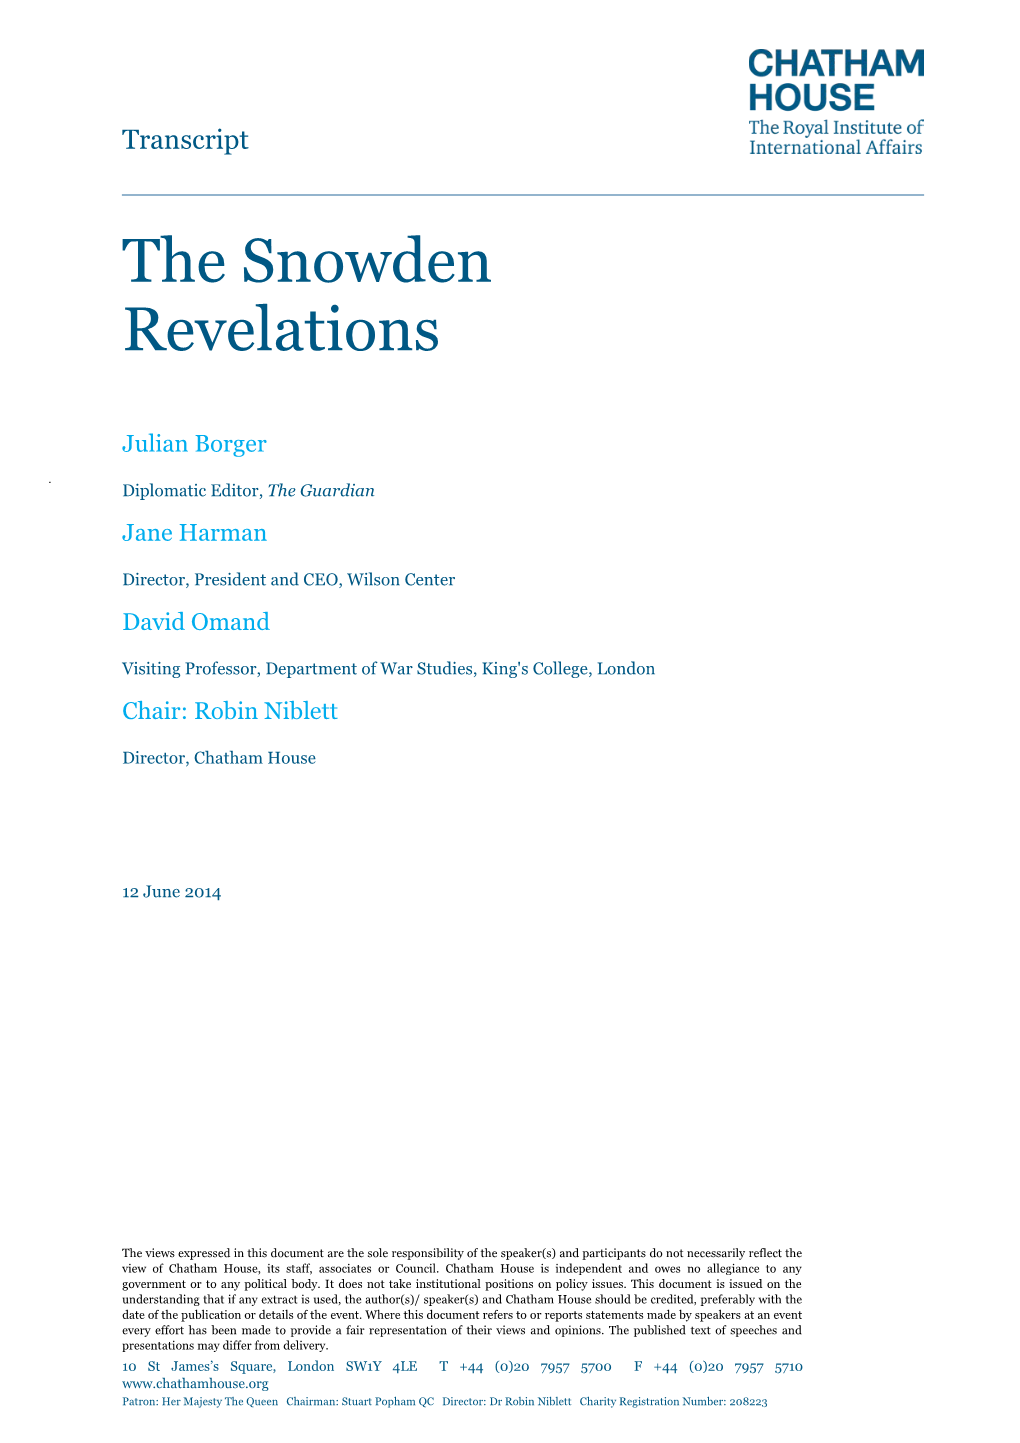 The Snowden Revelations